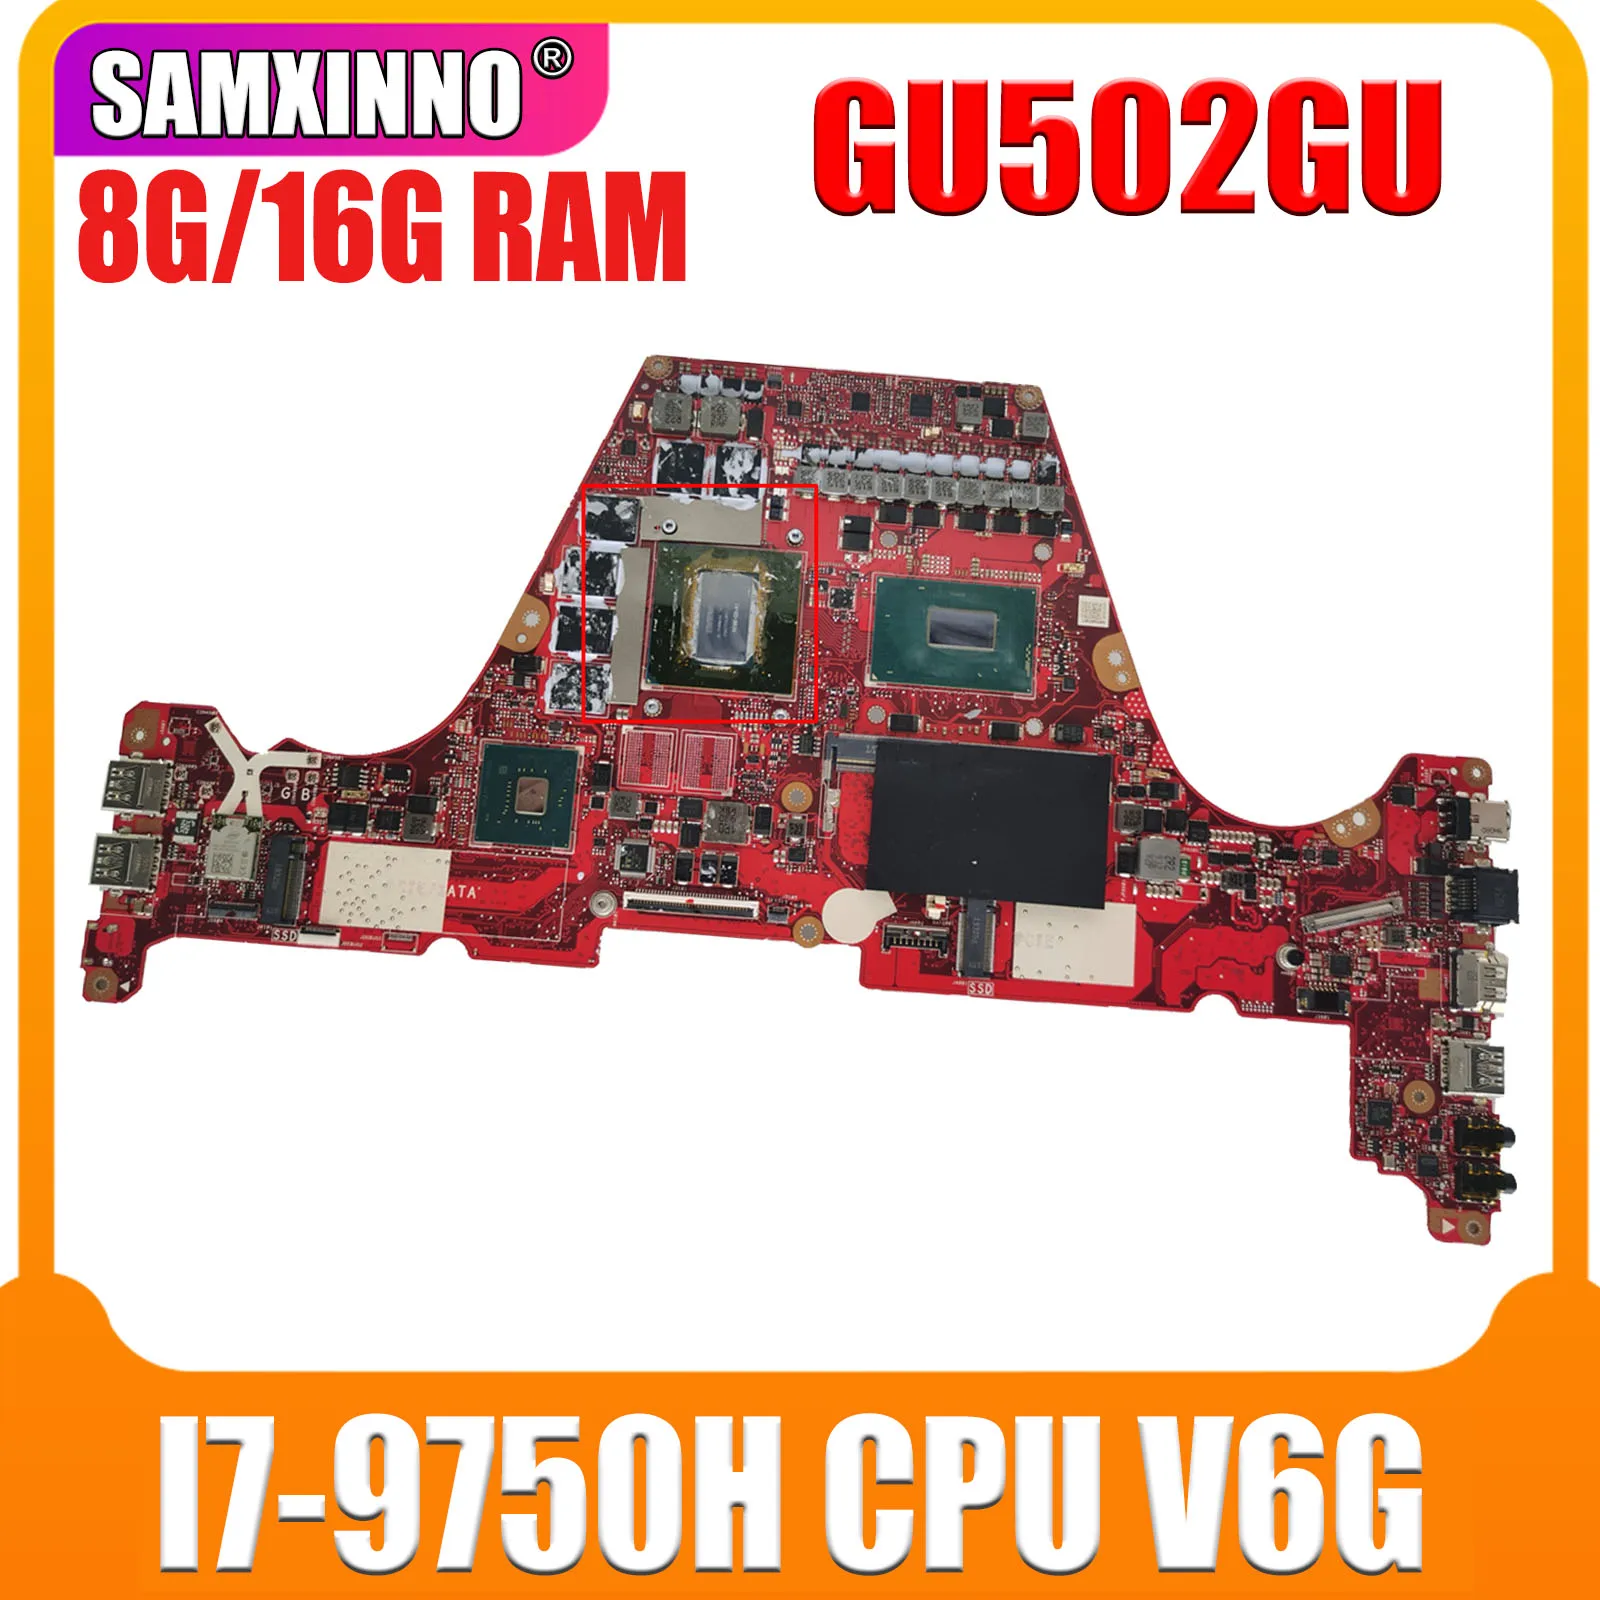 GU502GU Notebook Mainboard V6G I7-9750H CPU 8G 16G RAM for ASUS GU502GU GU502G GU502 Laptop Motherboard 90NR0250-R00010